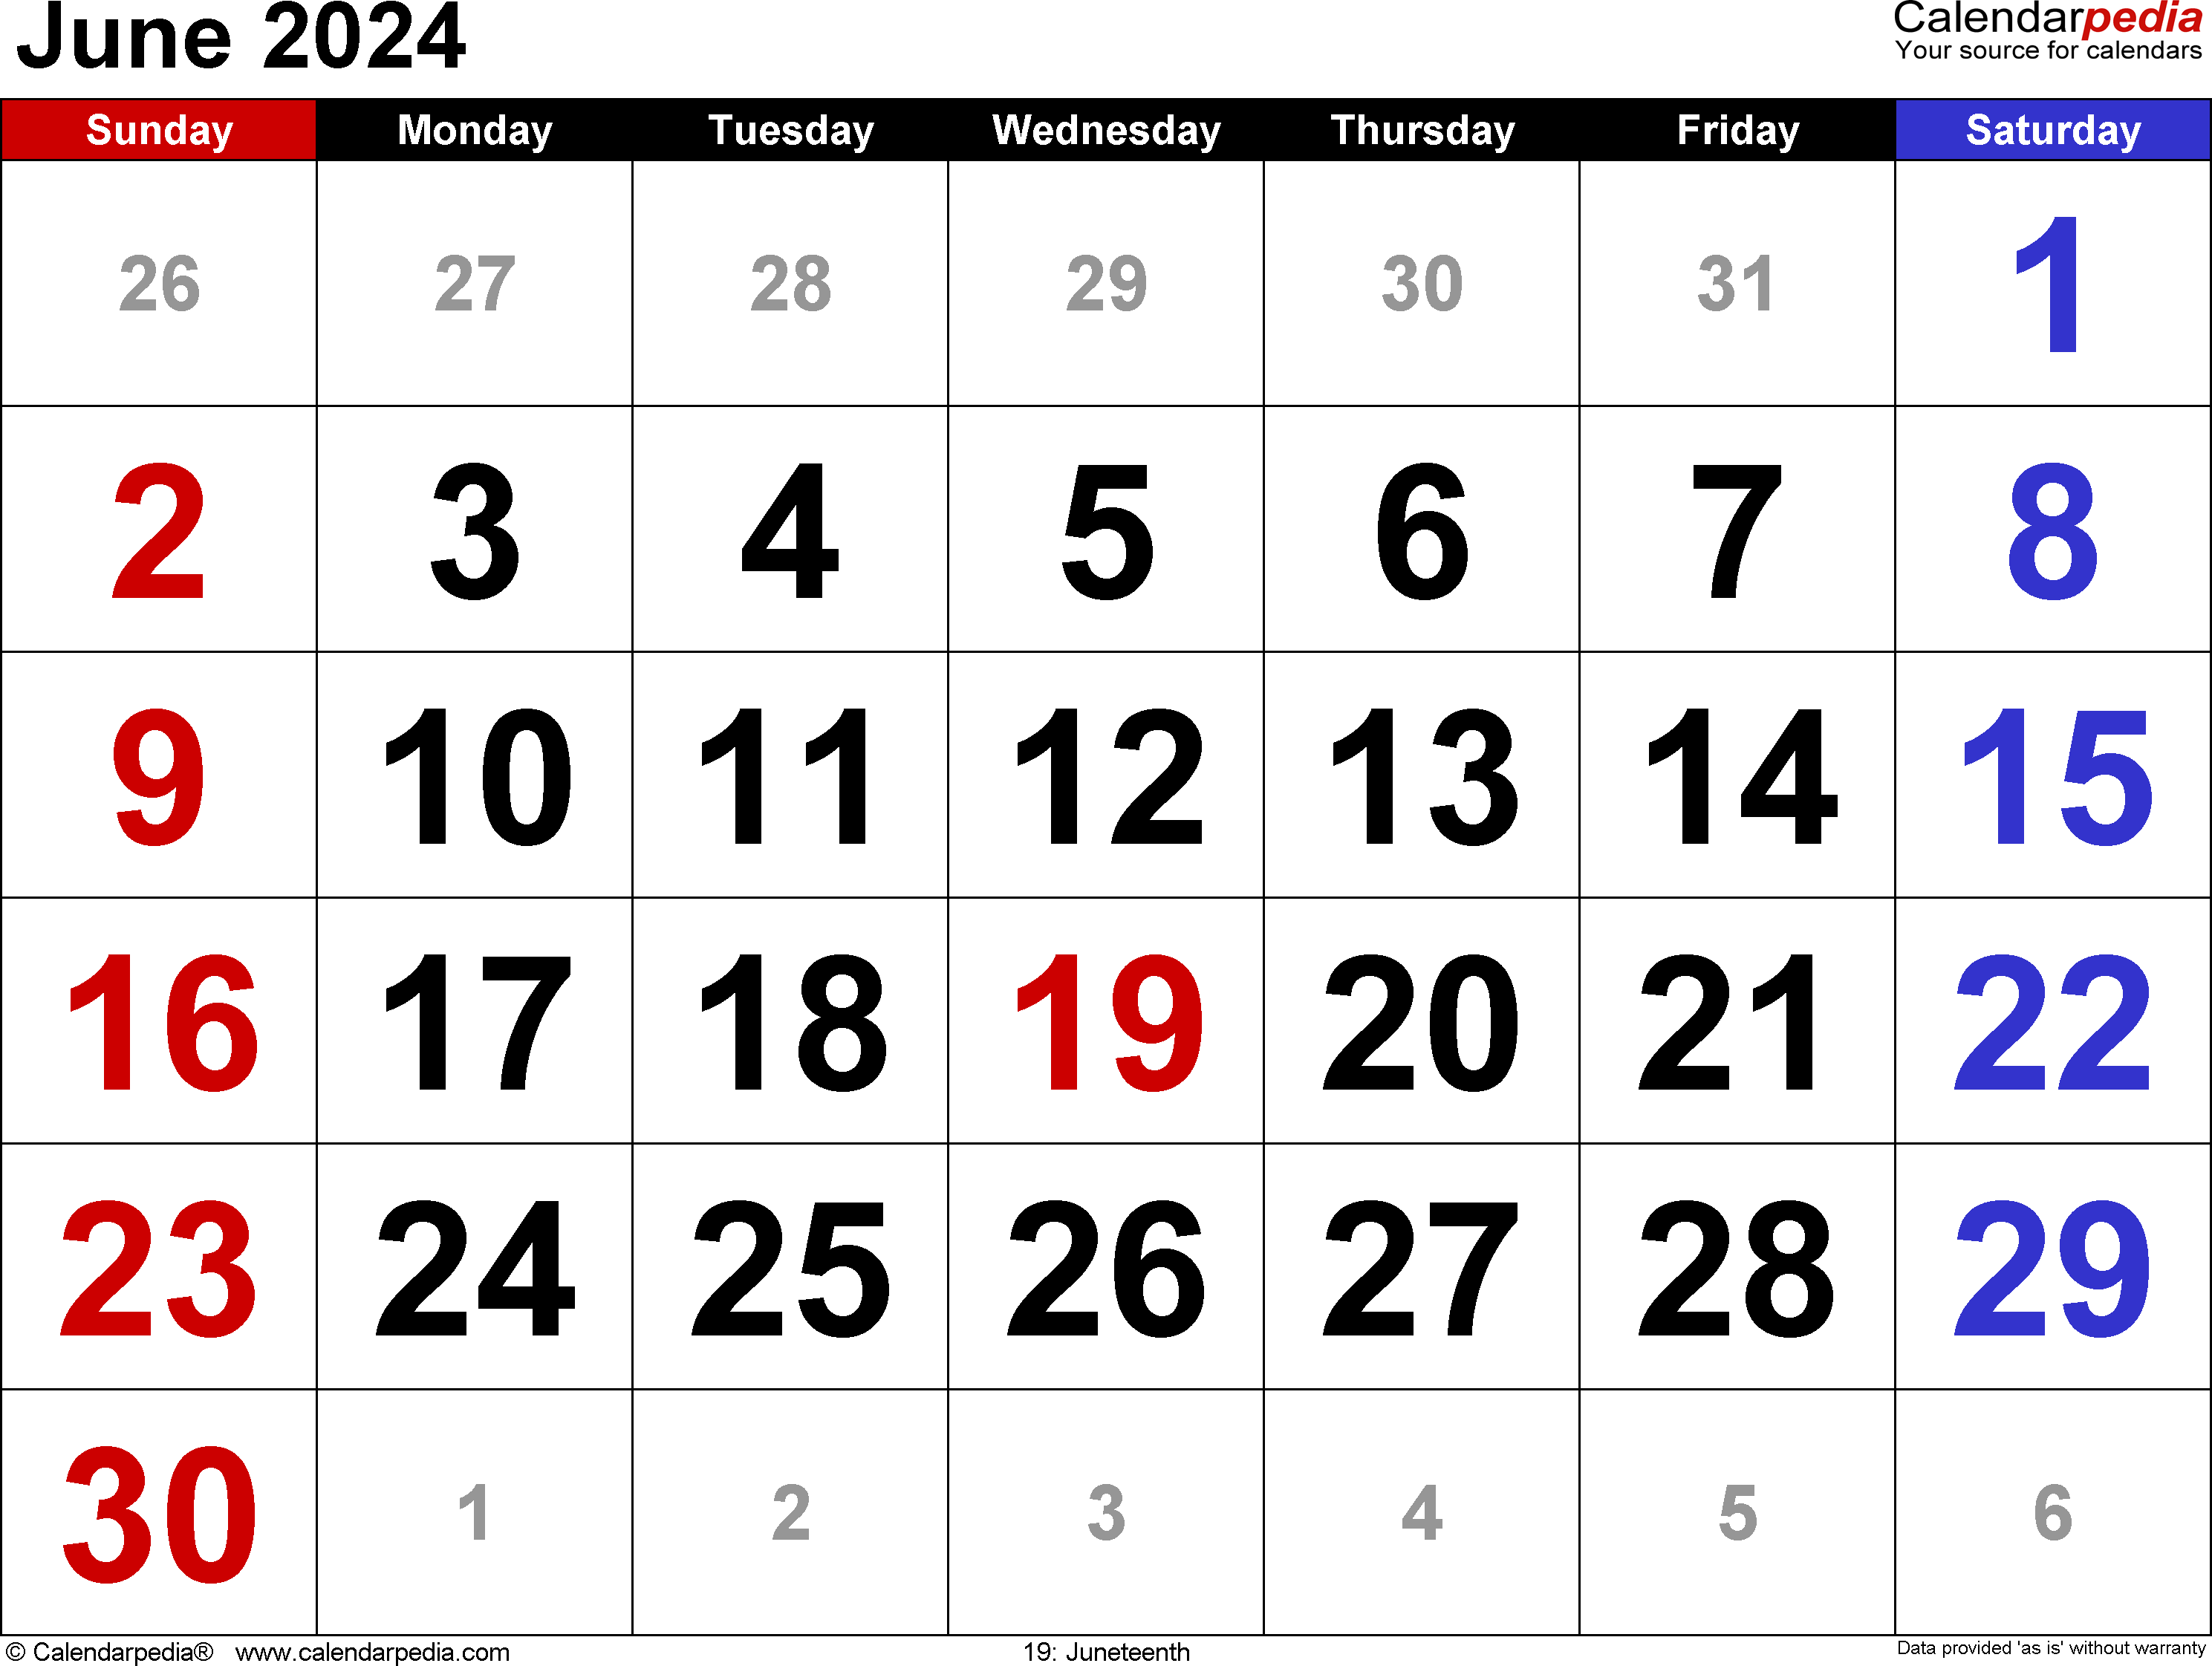 June 2024 Calendar. for Word, Excel